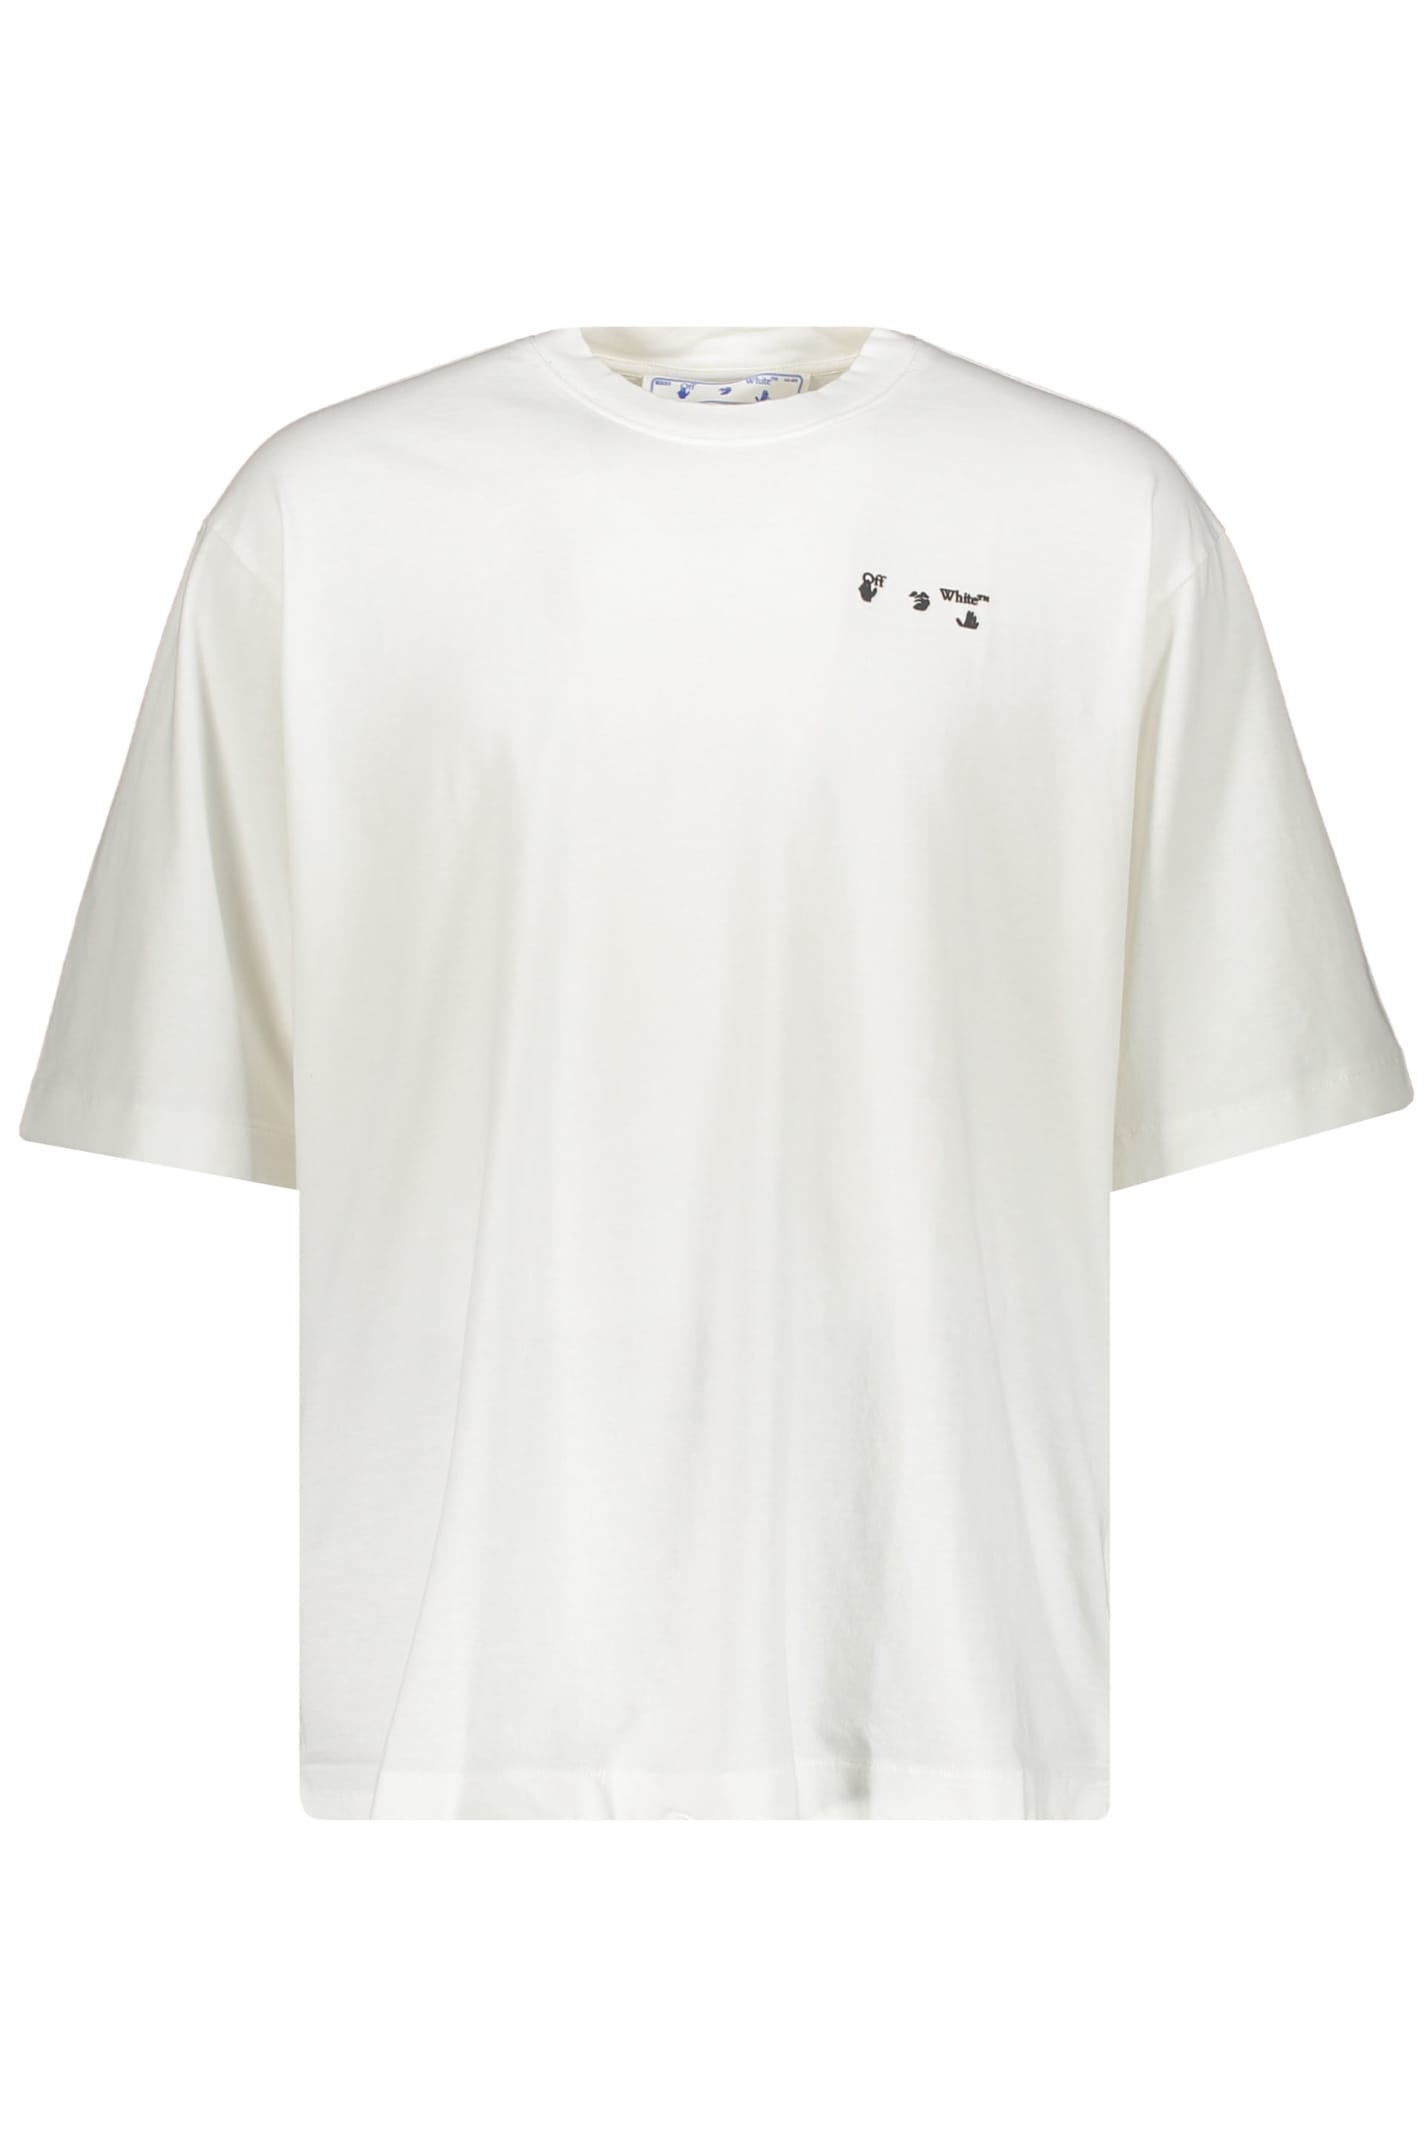 Off-White Logo Cotton T-shirt